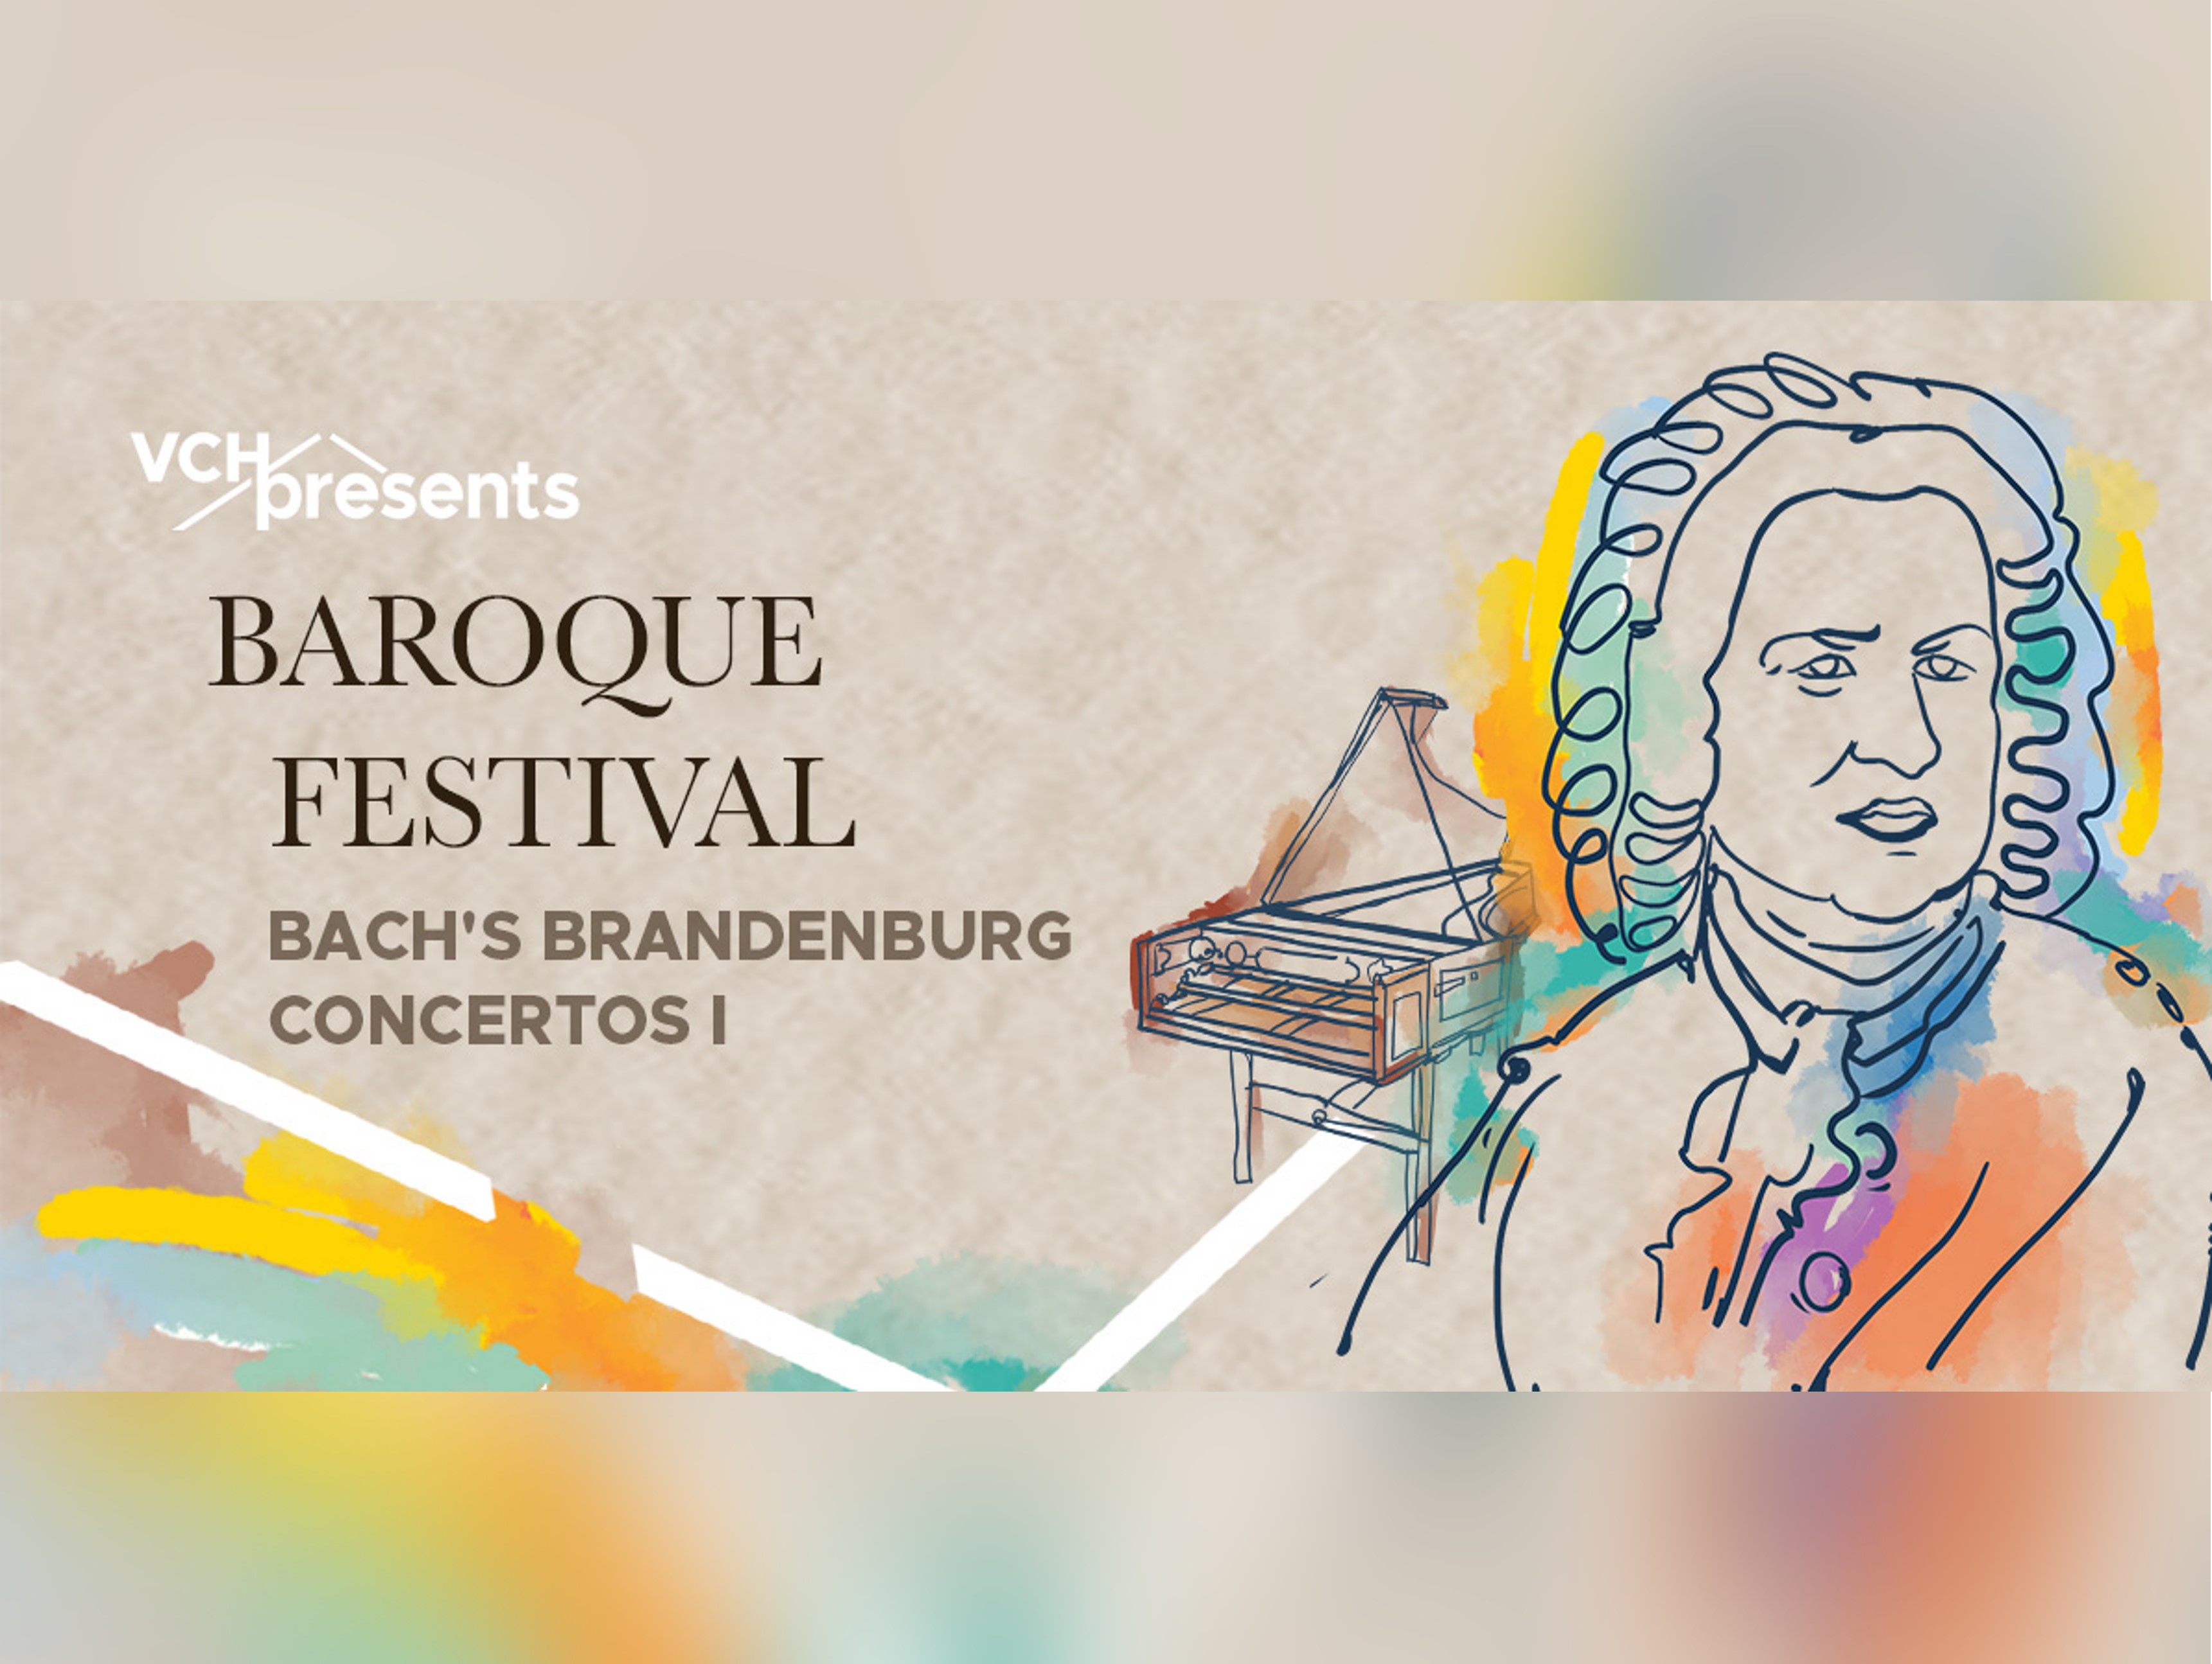 VCHpresents Baroque Festival: Bach’s Brandenburg Concertos Part I